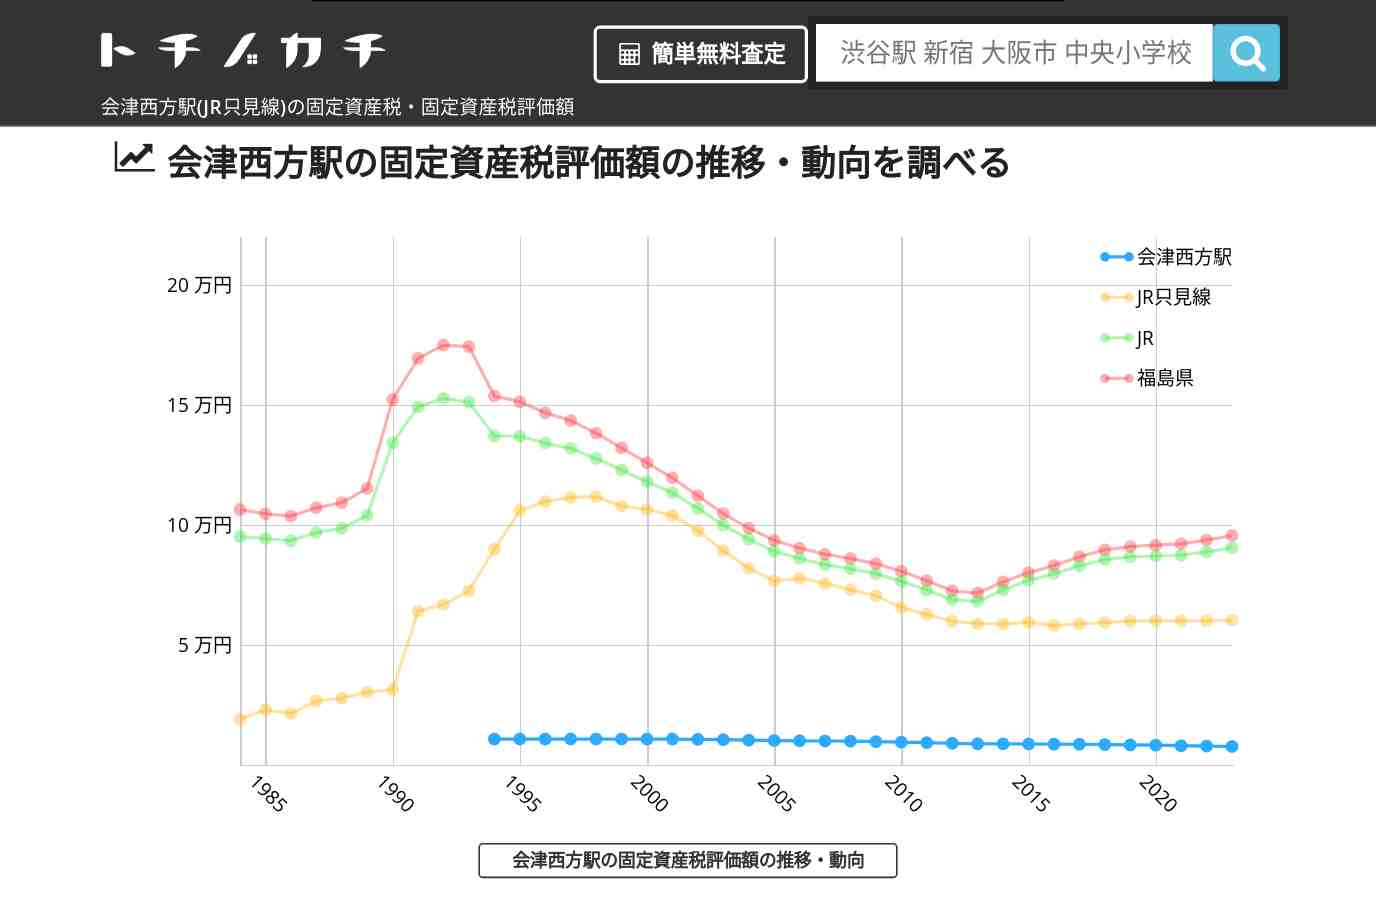 会津西方駅(JR只見線)の固定資産税・固定資産税評価額 | トチノカチ